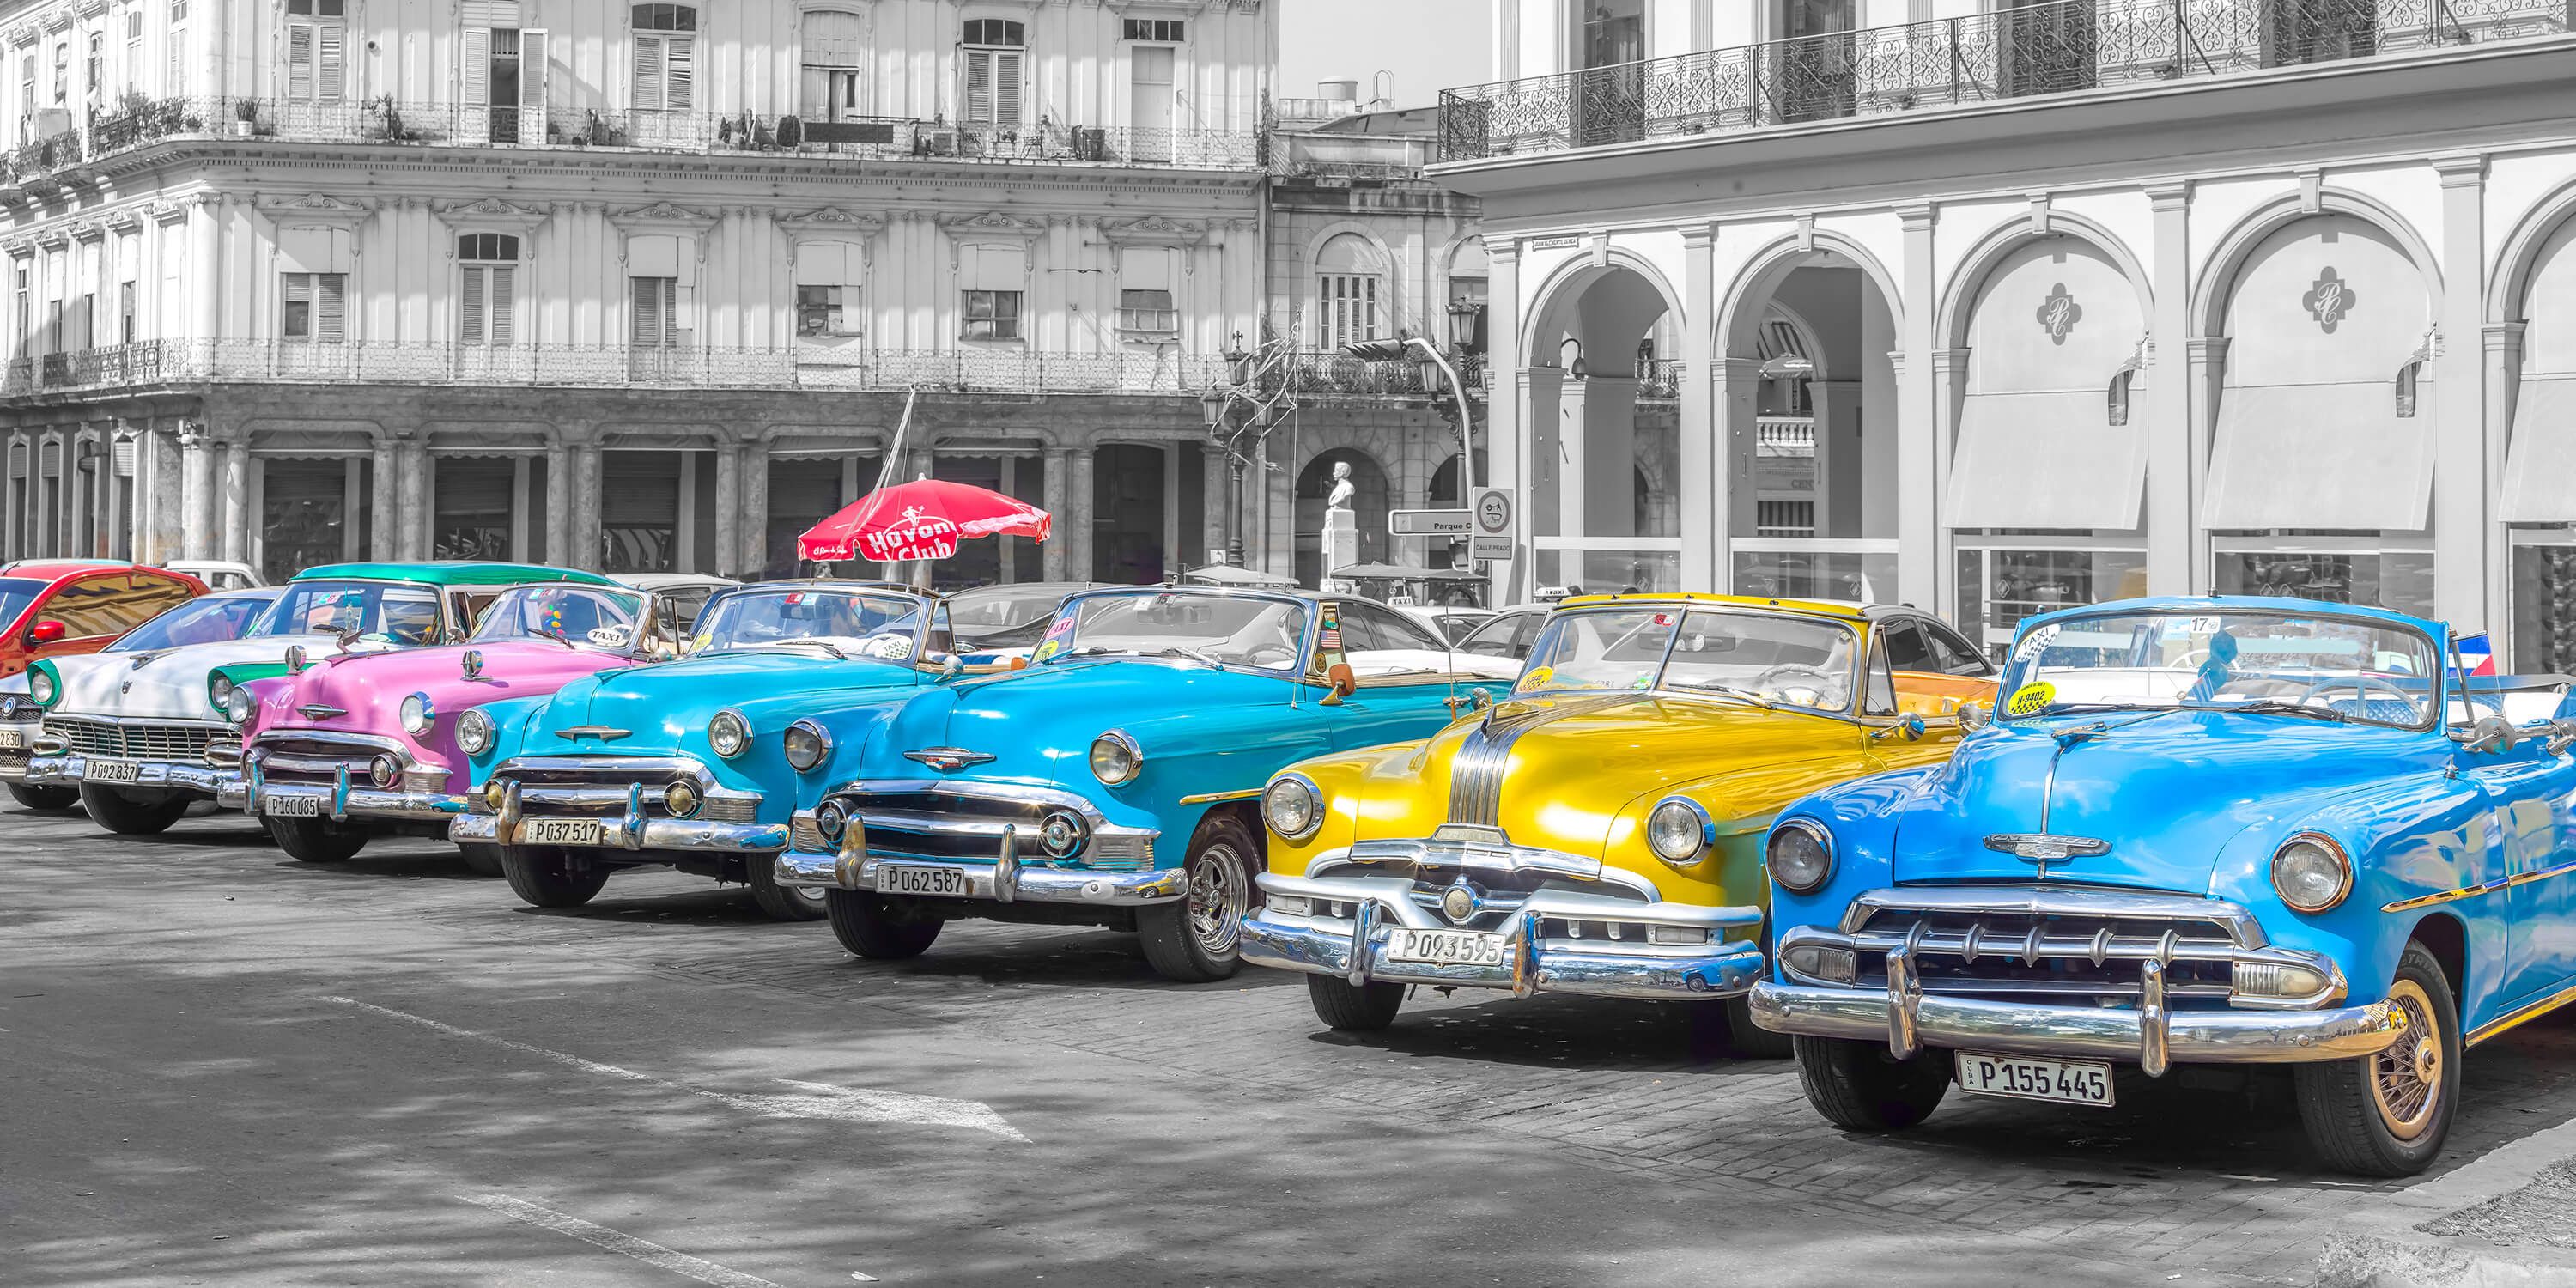  Traditionelle kubanische Autos